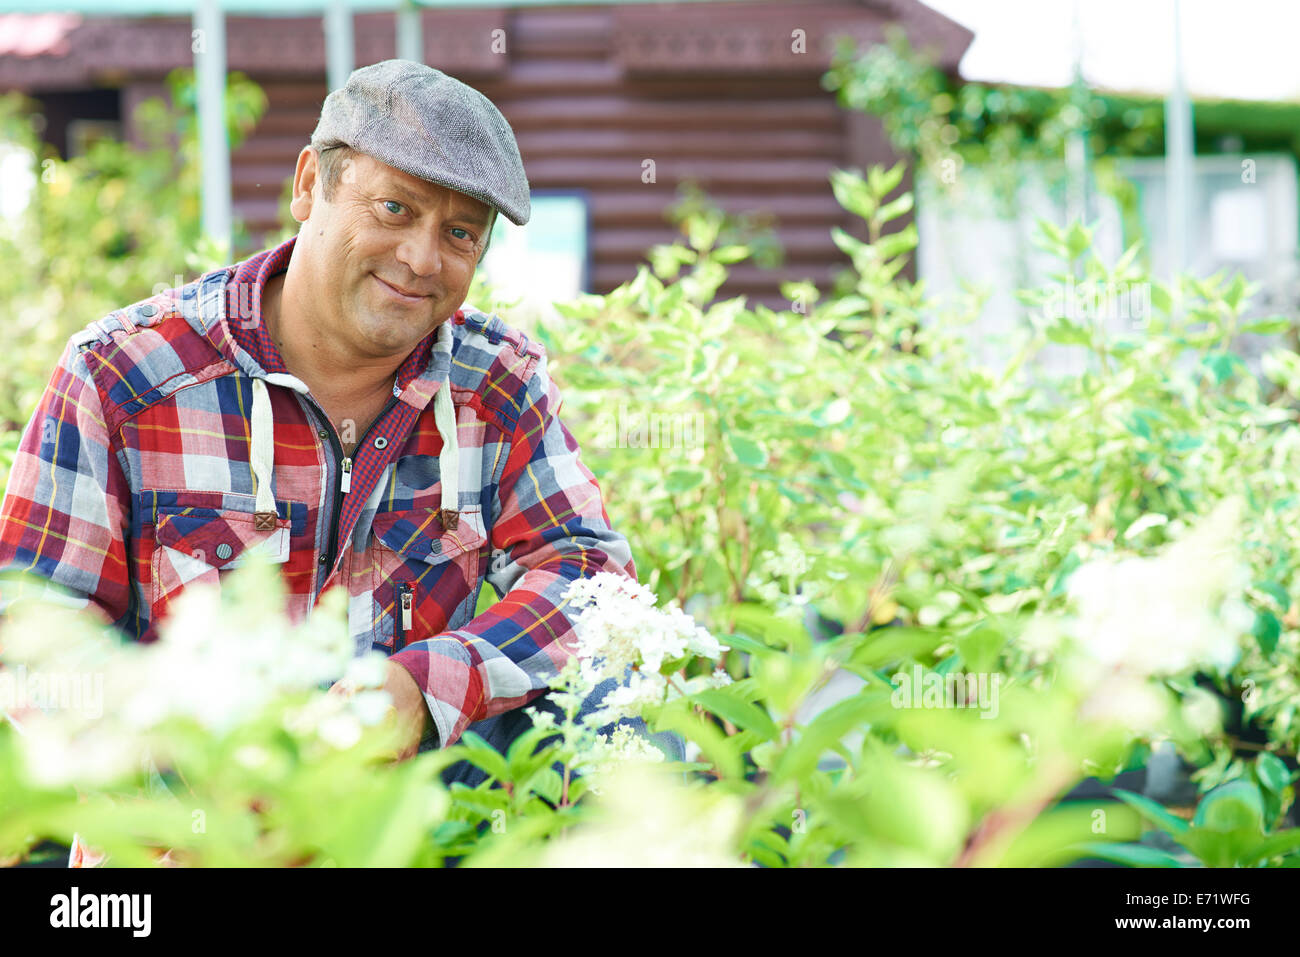 Mature male gardener looking at camera among green bushes Stock Photo